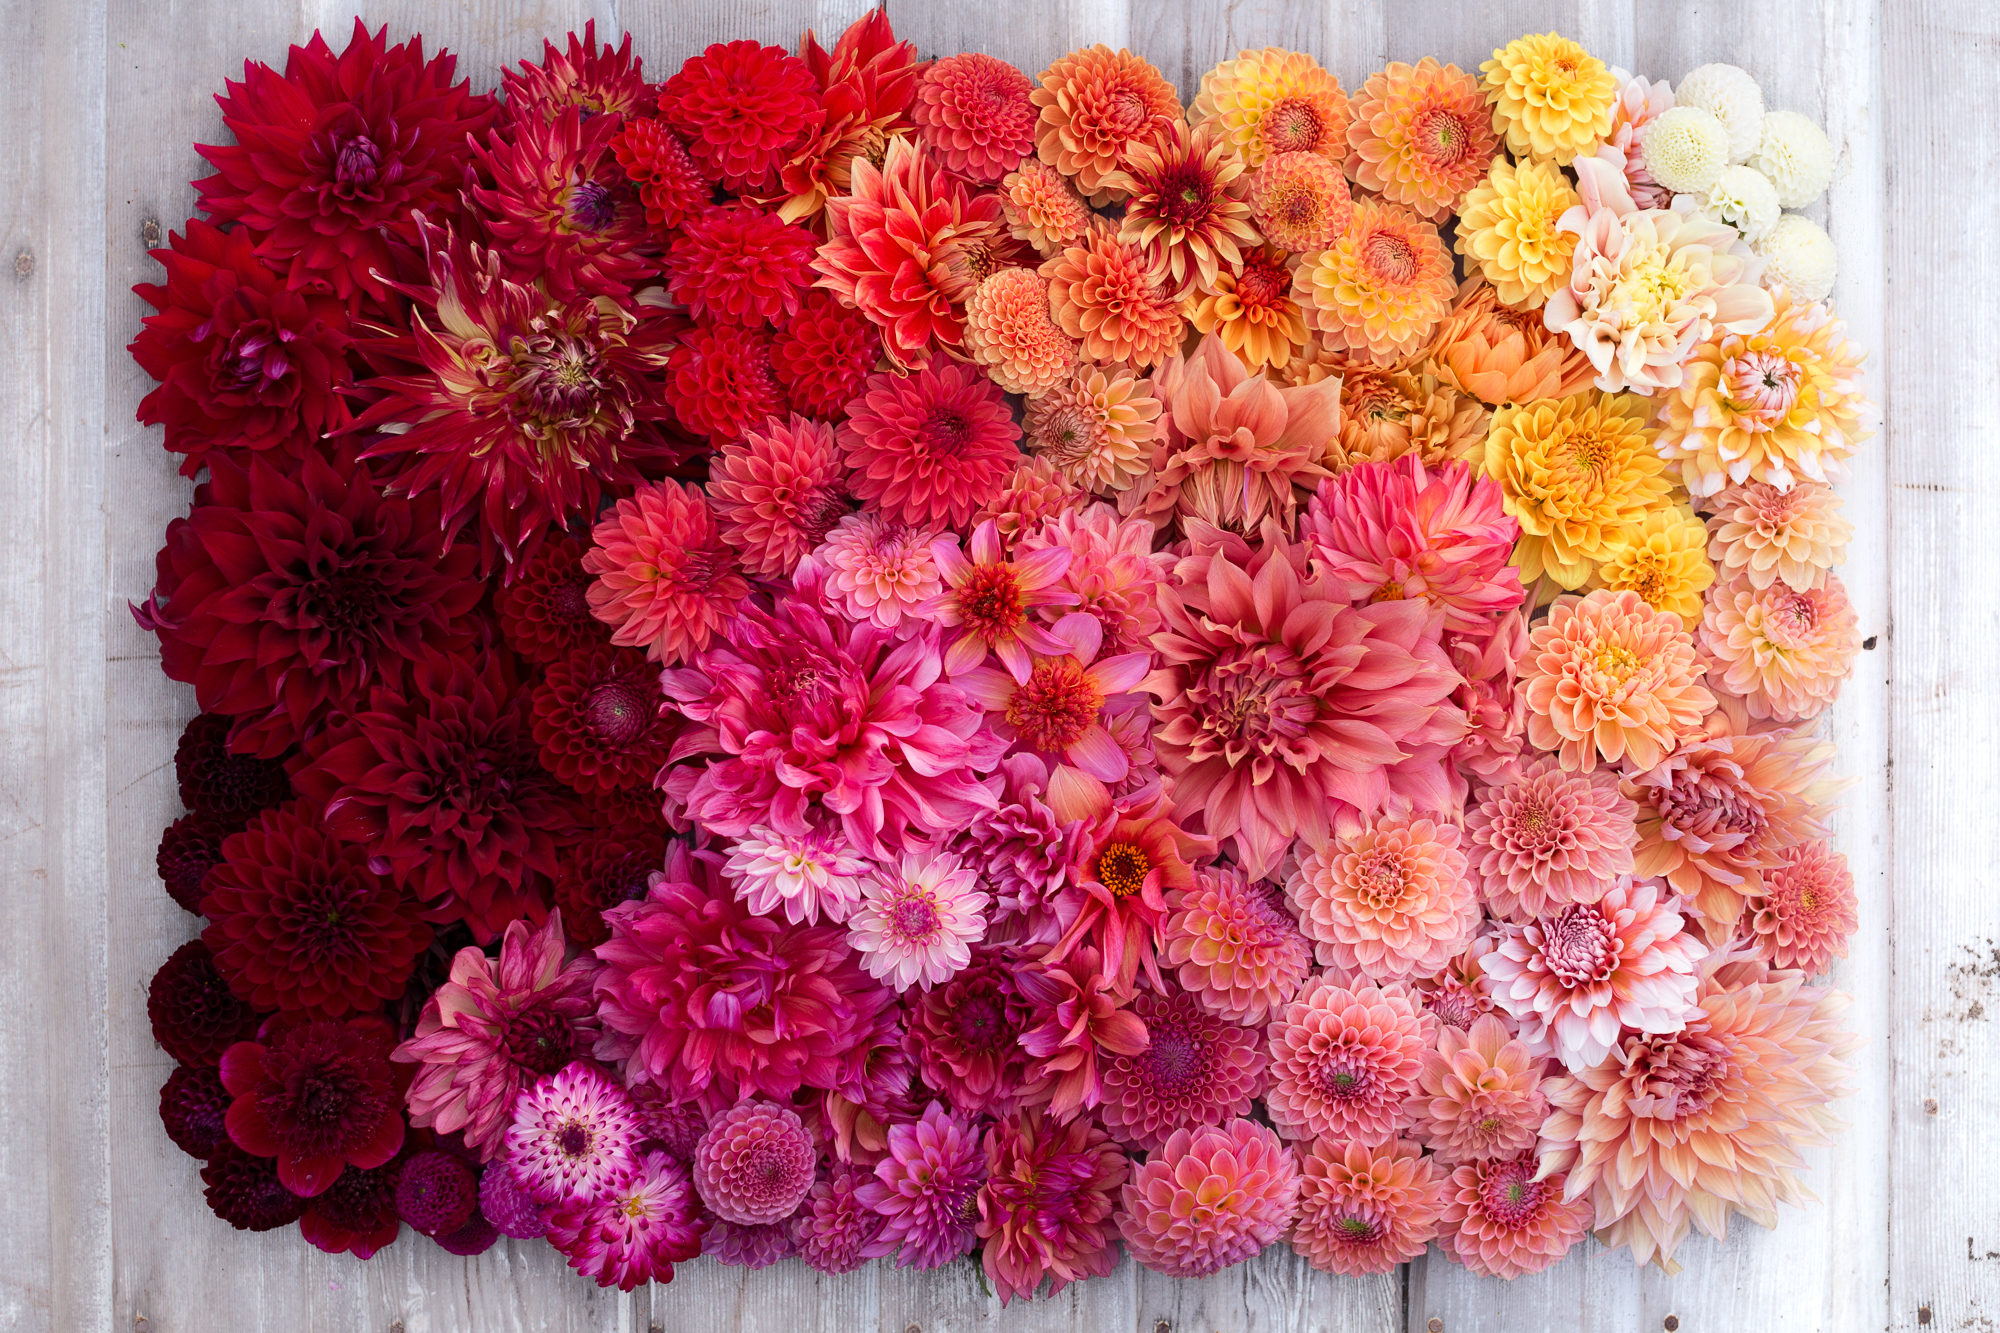 Dahlia blooms arranged in a color gradient